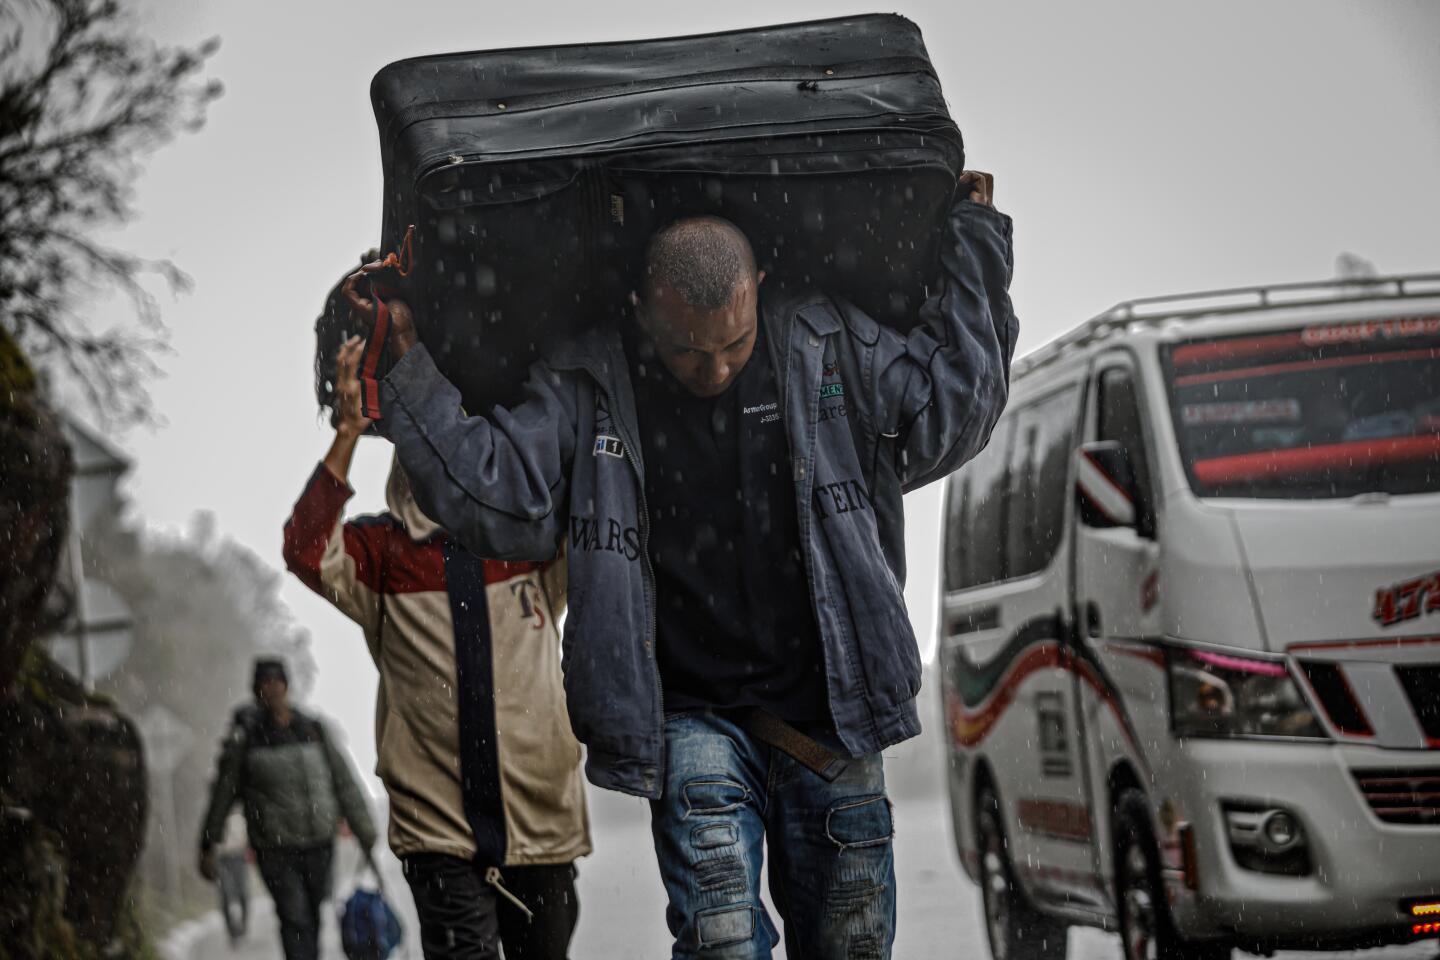 Venezuelan migrants walk through rain across a freezing plateau.